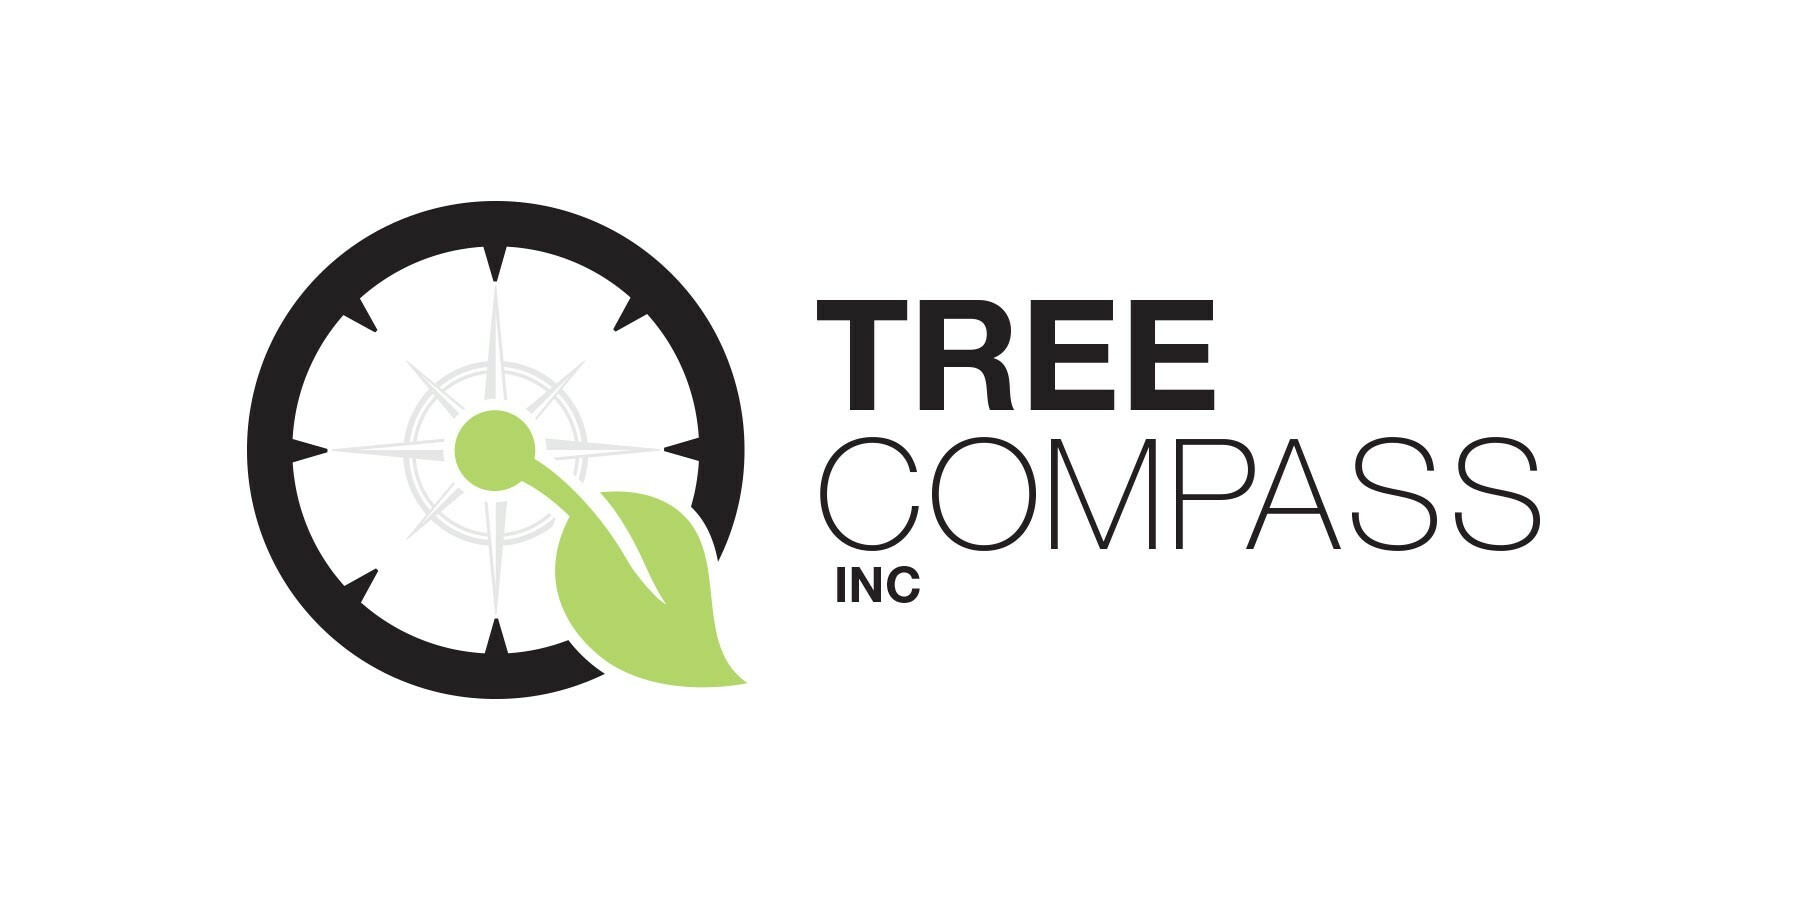 Tree Compass's logo